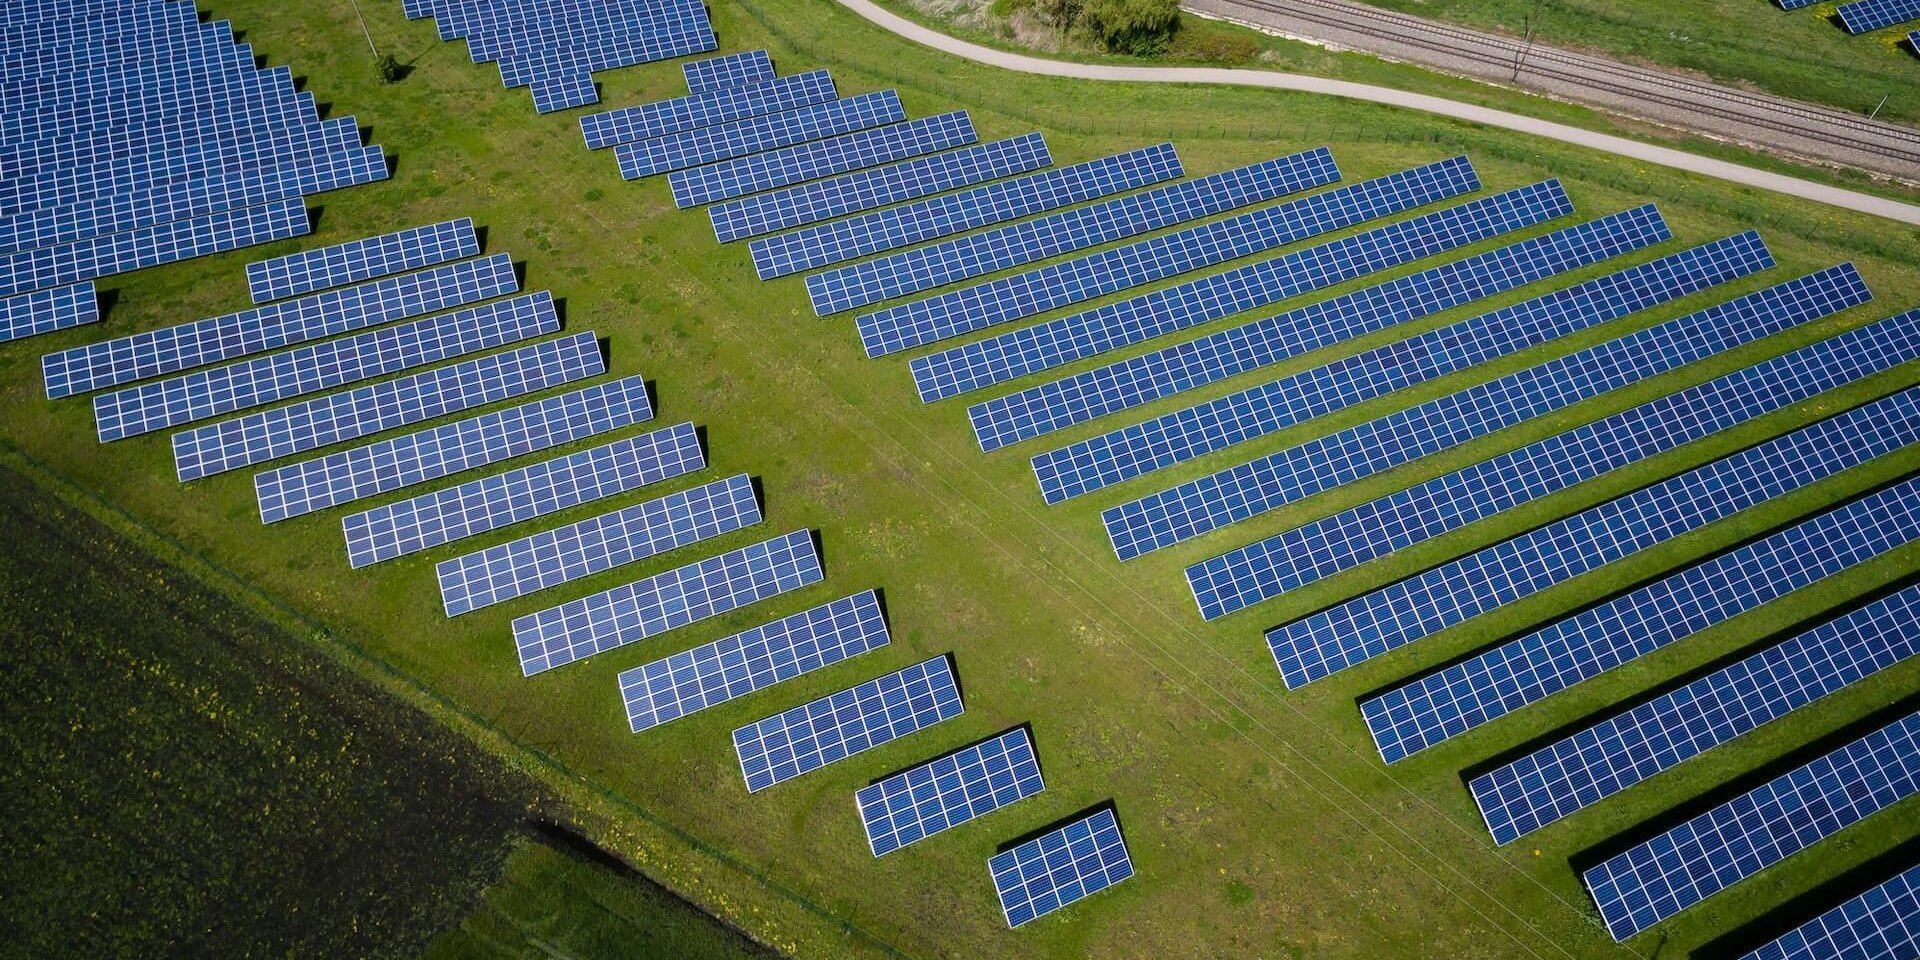 Solar panels on green lawns